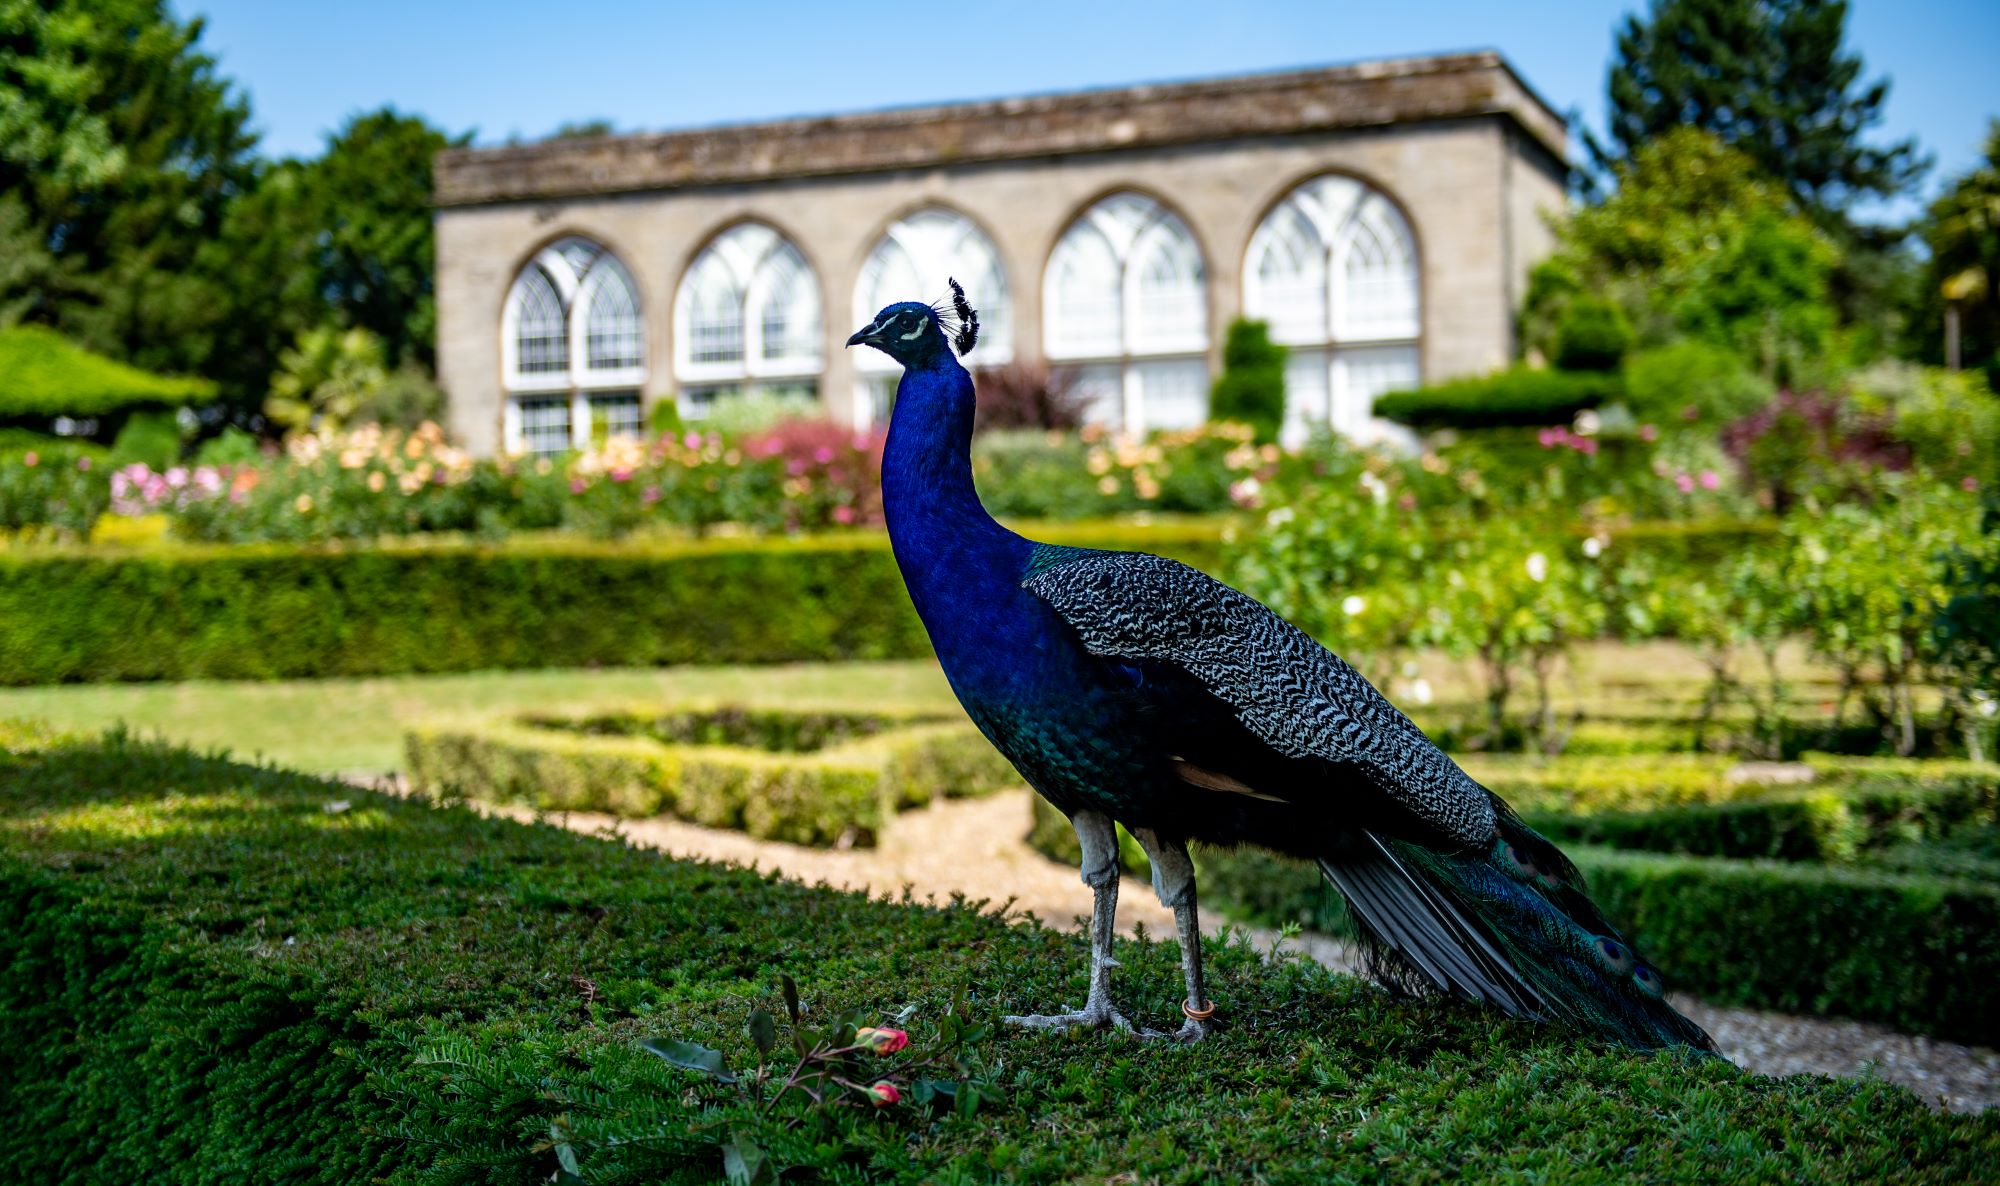 A Peacock in The Gardens